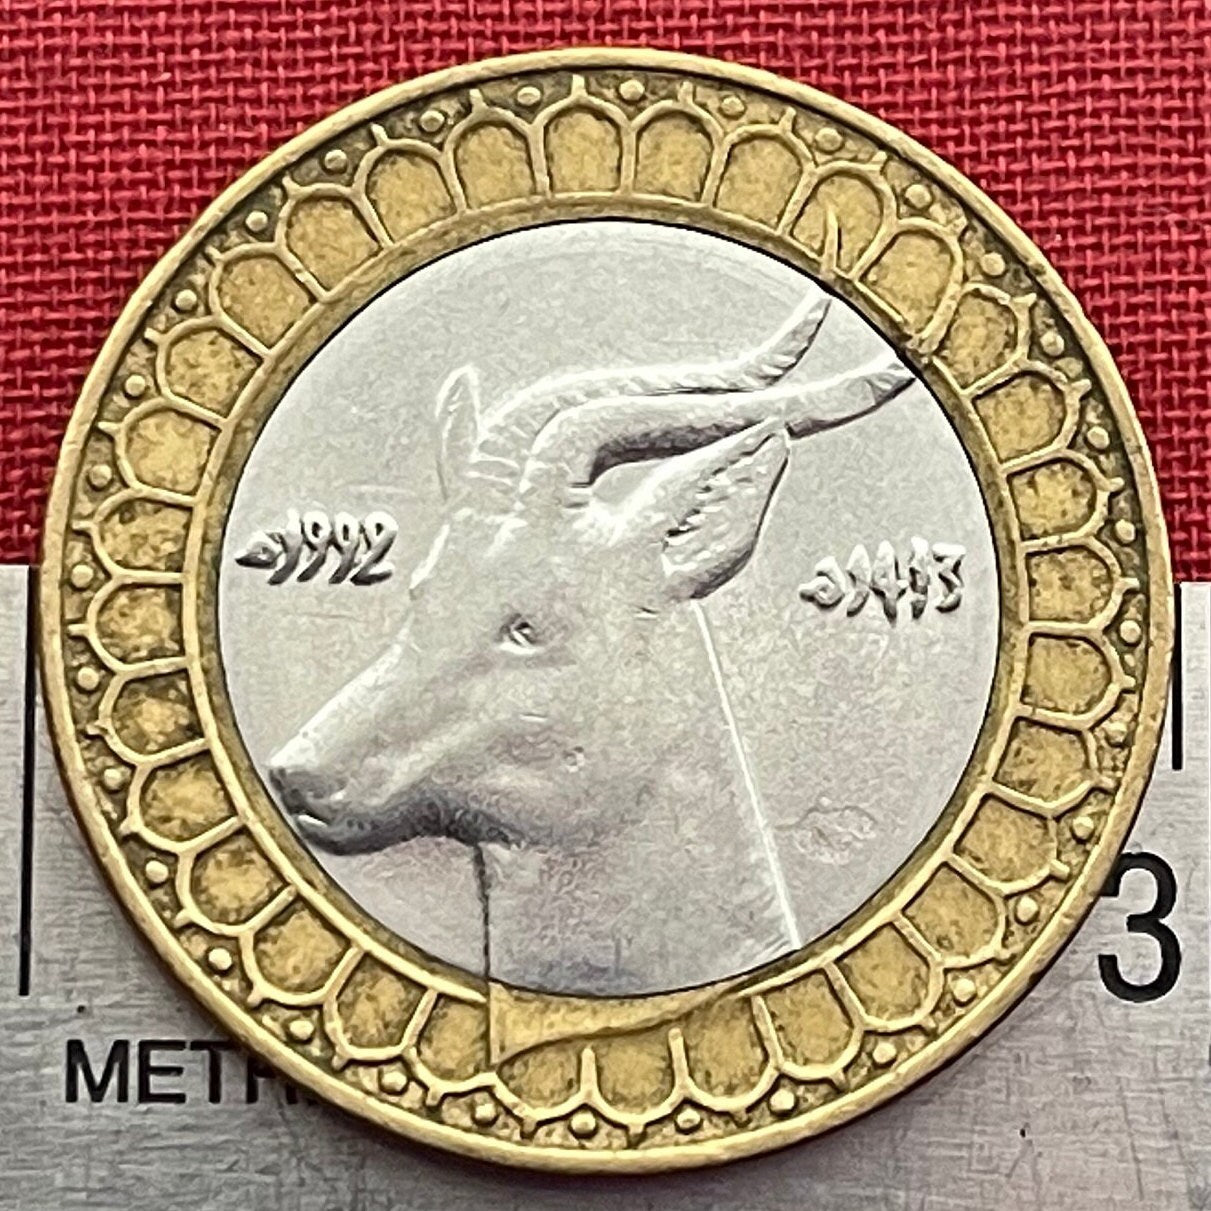 Dama Gazelle 50 Dinars Algeria Authentic Coin Money for Jewelry and Craft Making (Addra Gazelle) or (Mhorr gazelle) (Ménas) (Bimetallic) VF